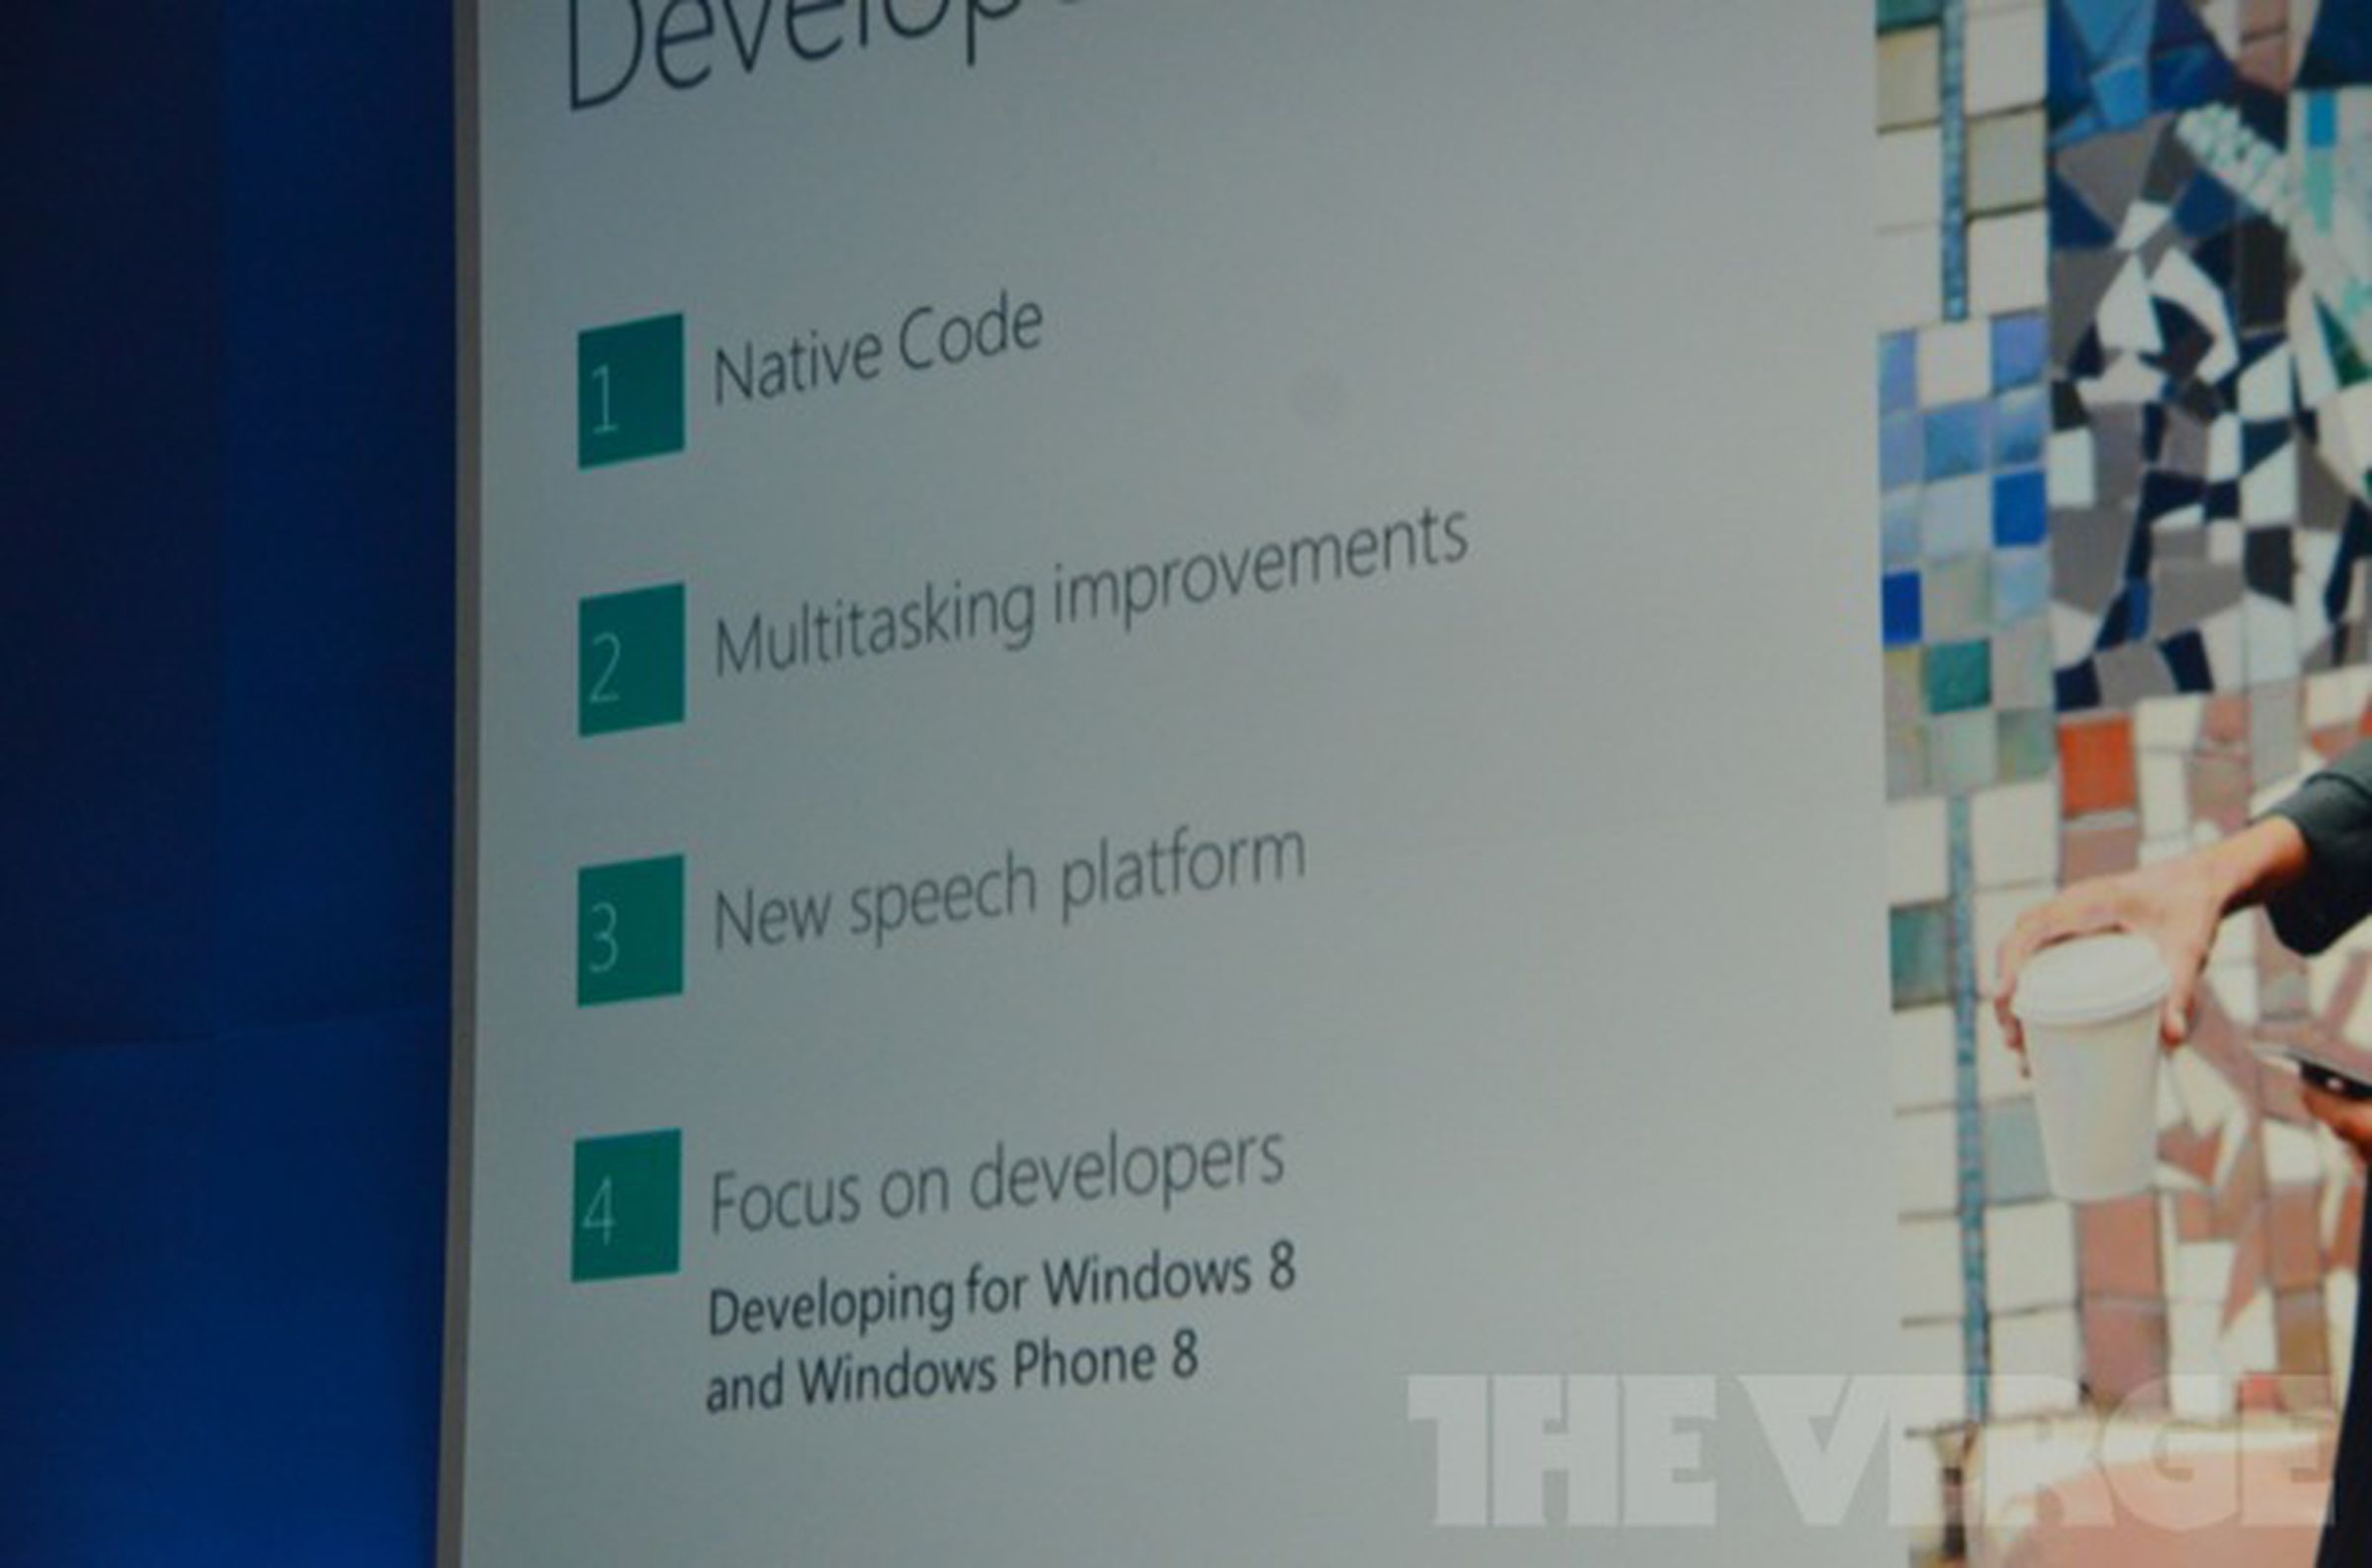 Windows Phone Summit: DirectX, native development, and shared code photos